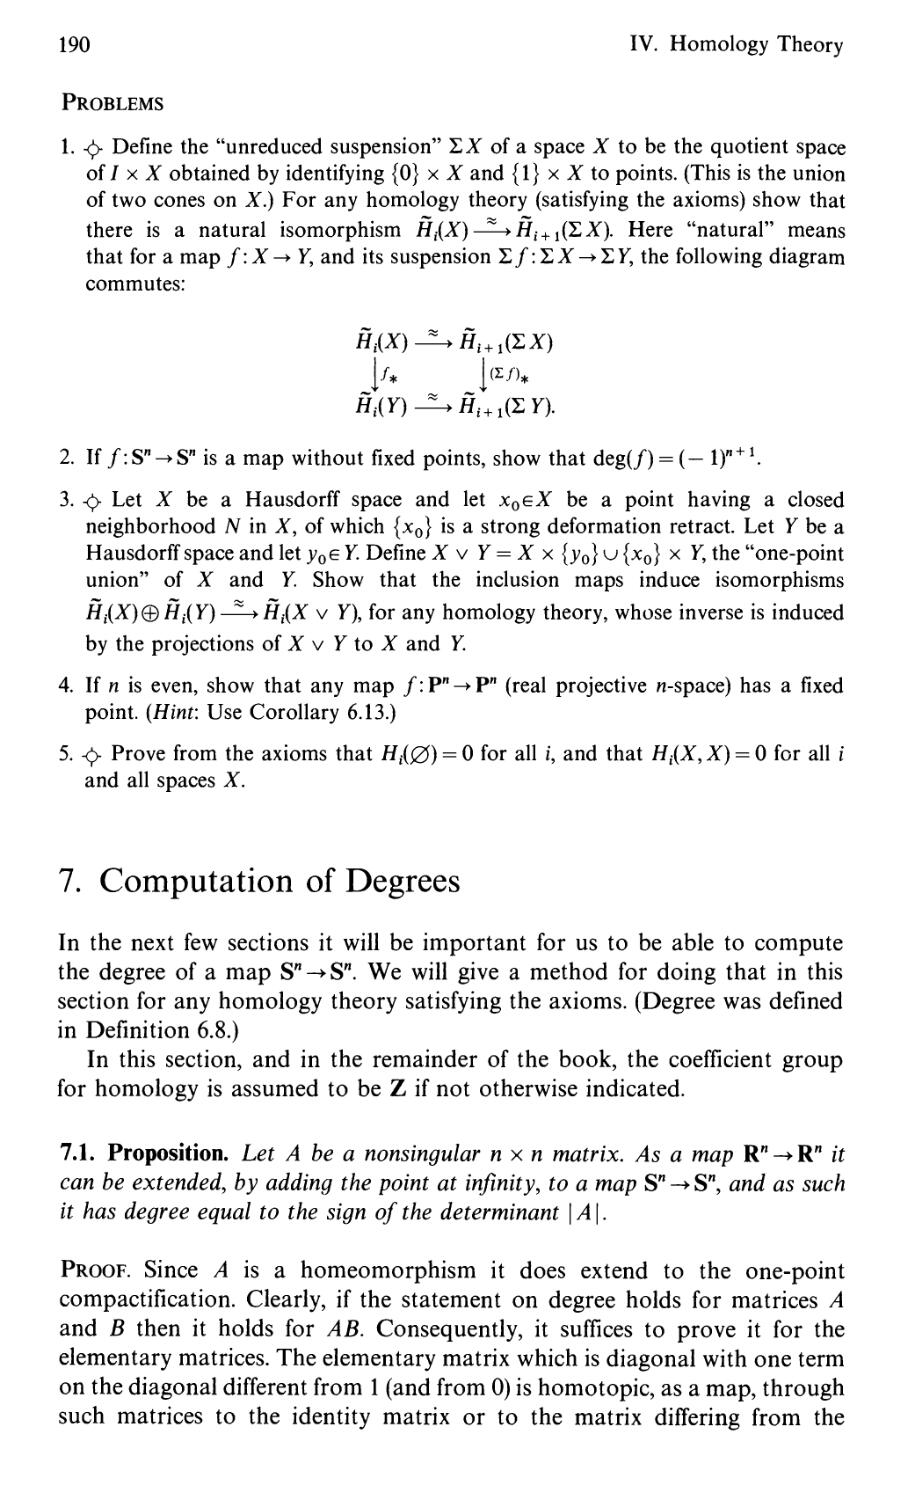 7. Computation of Degrees